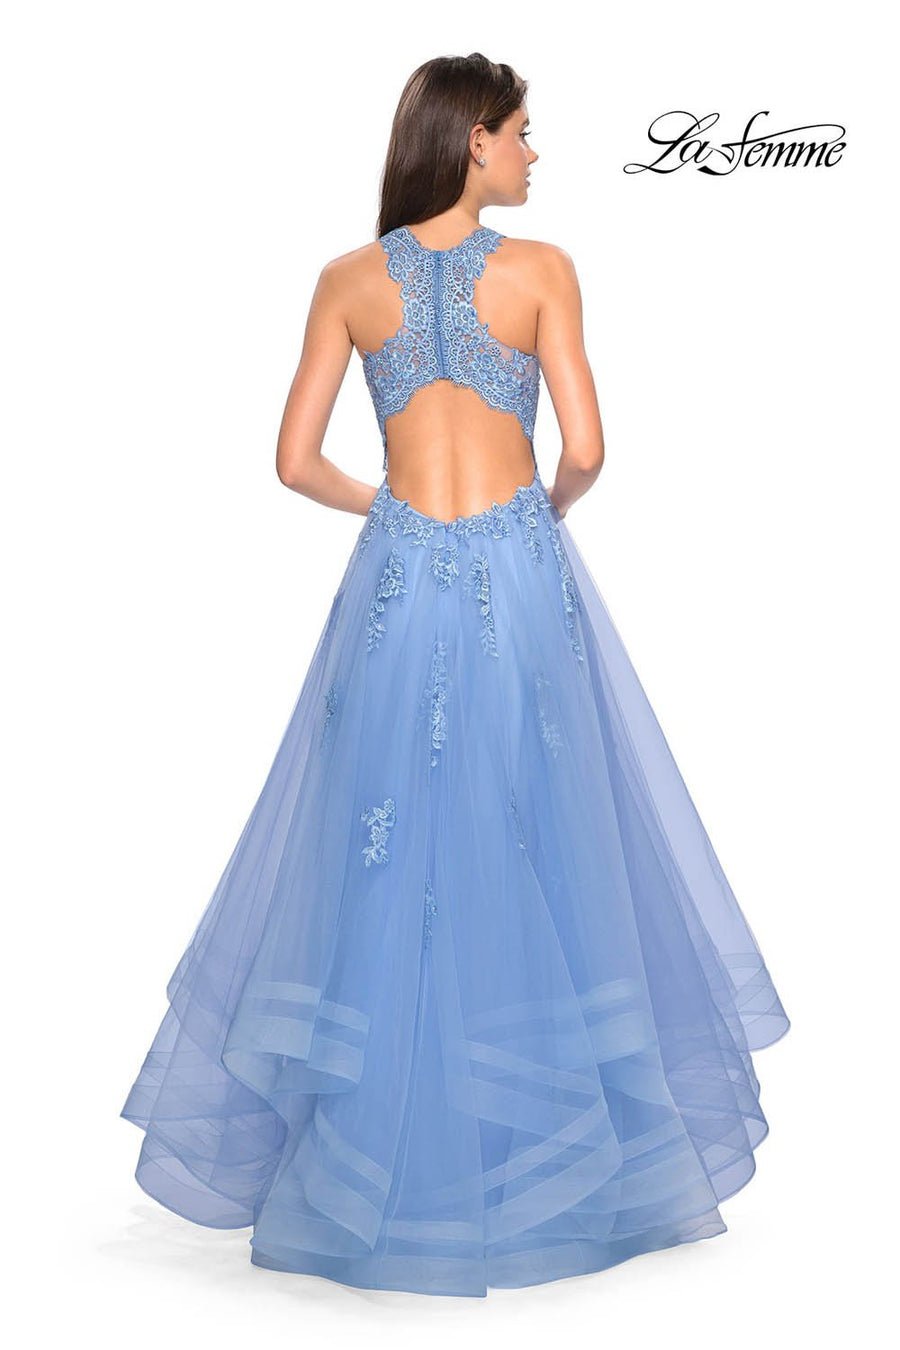 La Femme 27603 prom dress images.  La Femme 27603 is available in these colors: Cloud Blue, Lilac Mist, White.